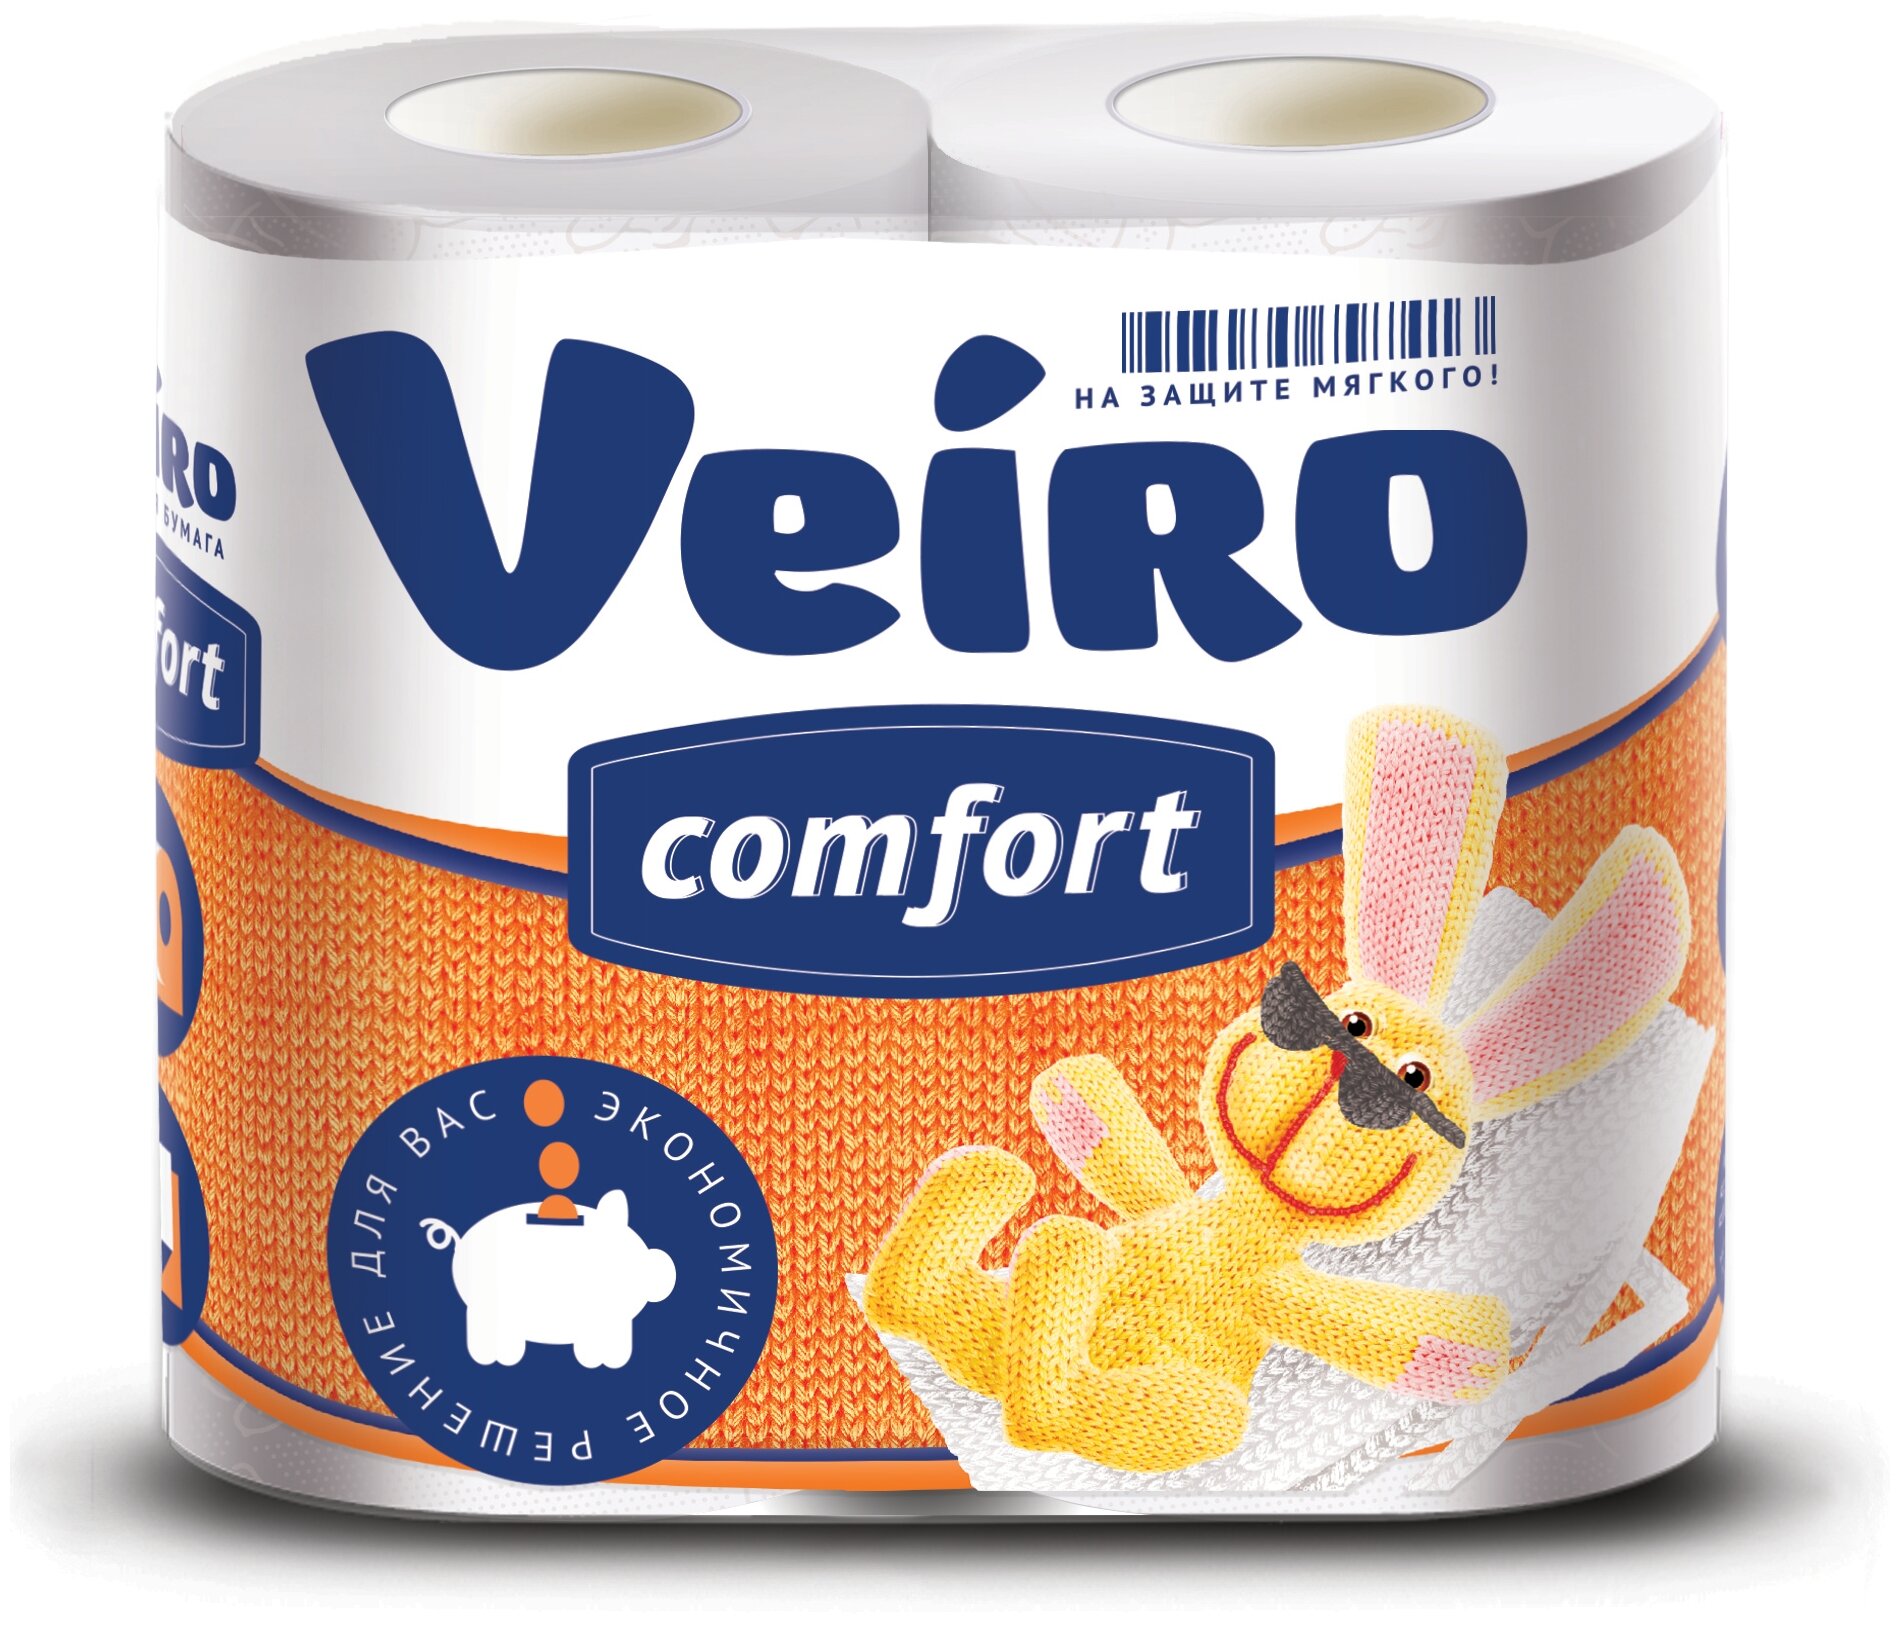 ТБрул Veiro Comfort, 5С24Comfort, 2-сл., 4 рулона, белый